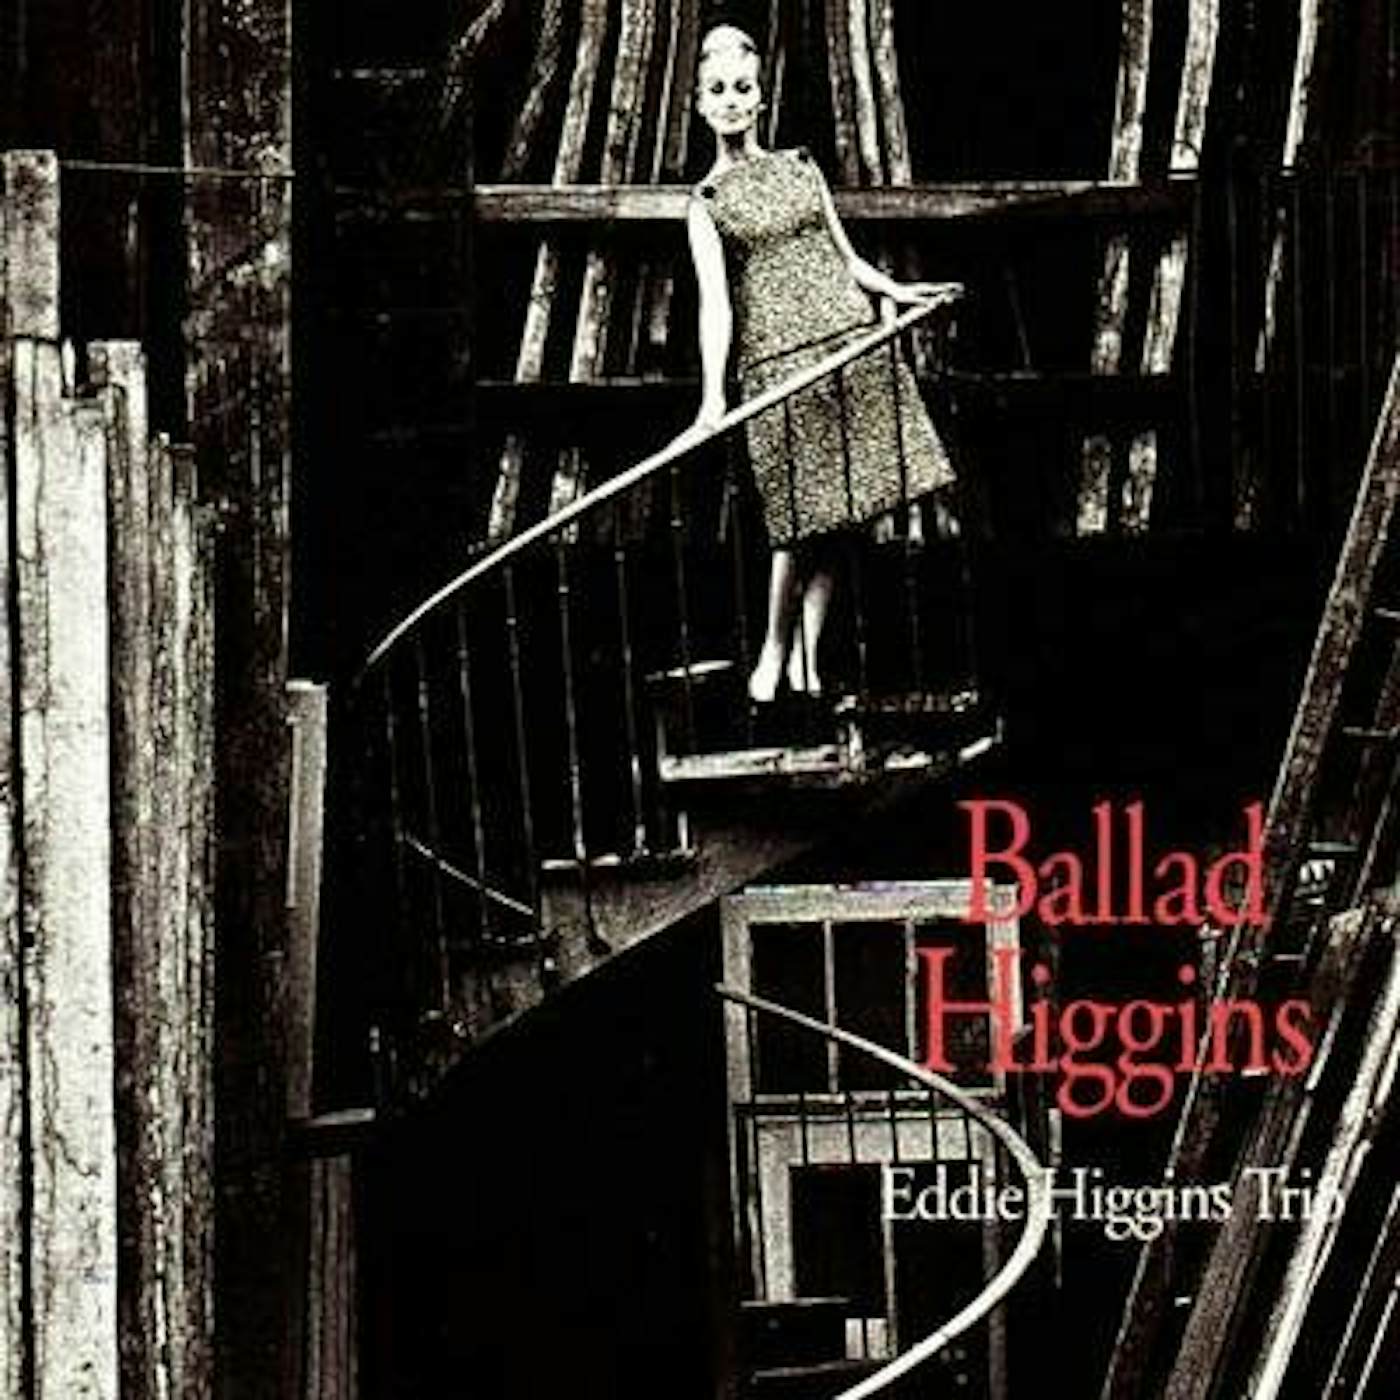 Eddie Higgins BALLAD HIGGINS CD